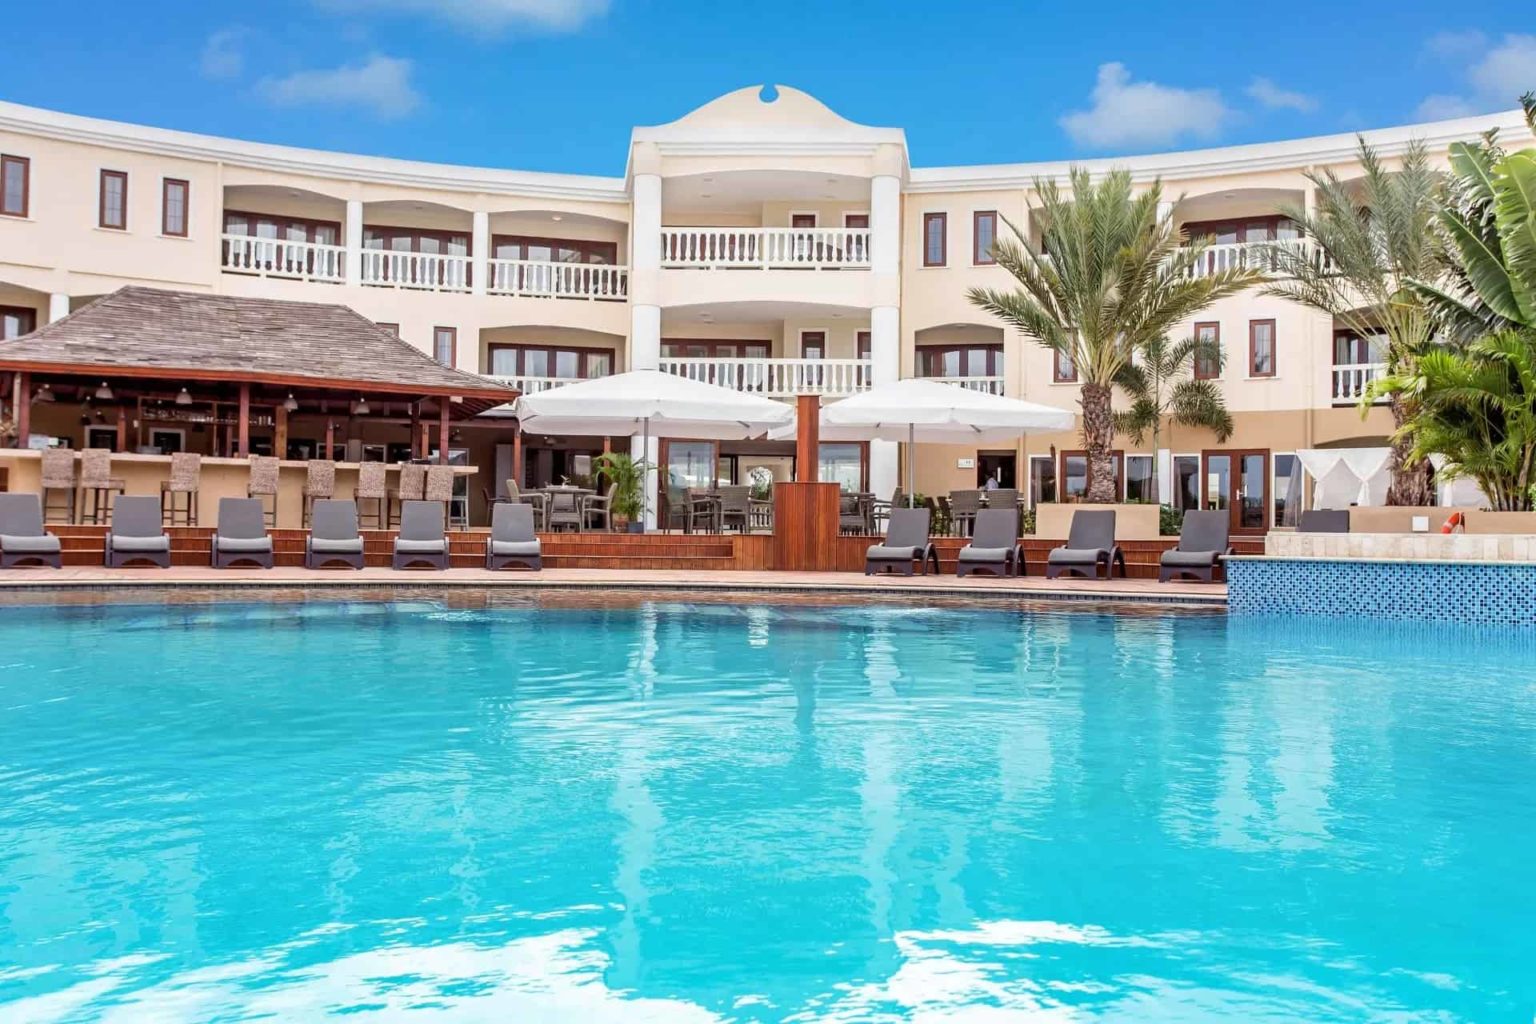 Acoya Curaçao Resort hotel, pool, and pool deck